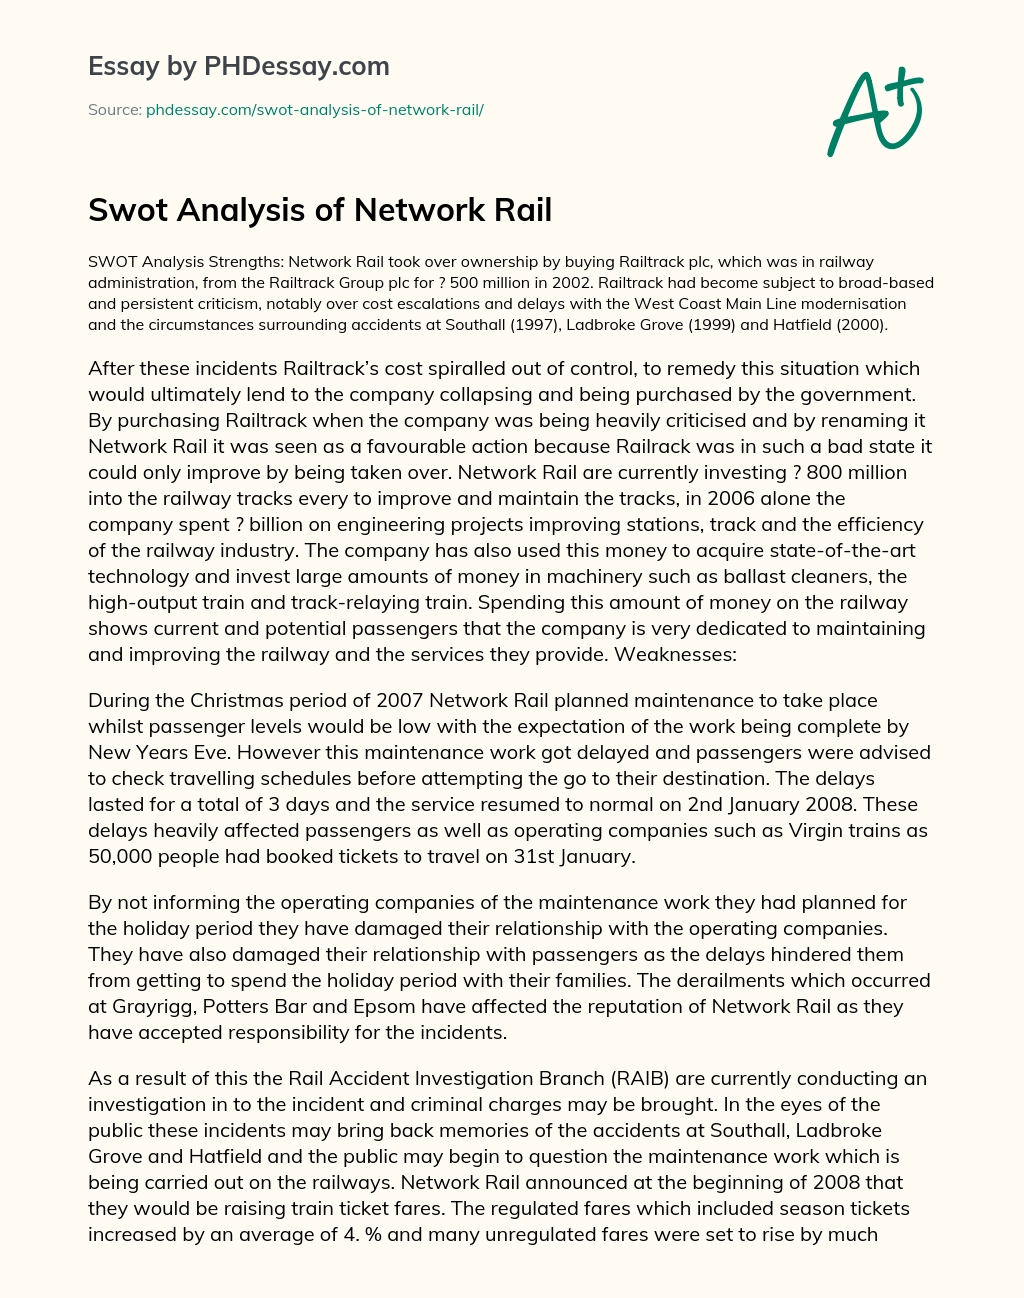 Swot Analysis of Network Rail essay